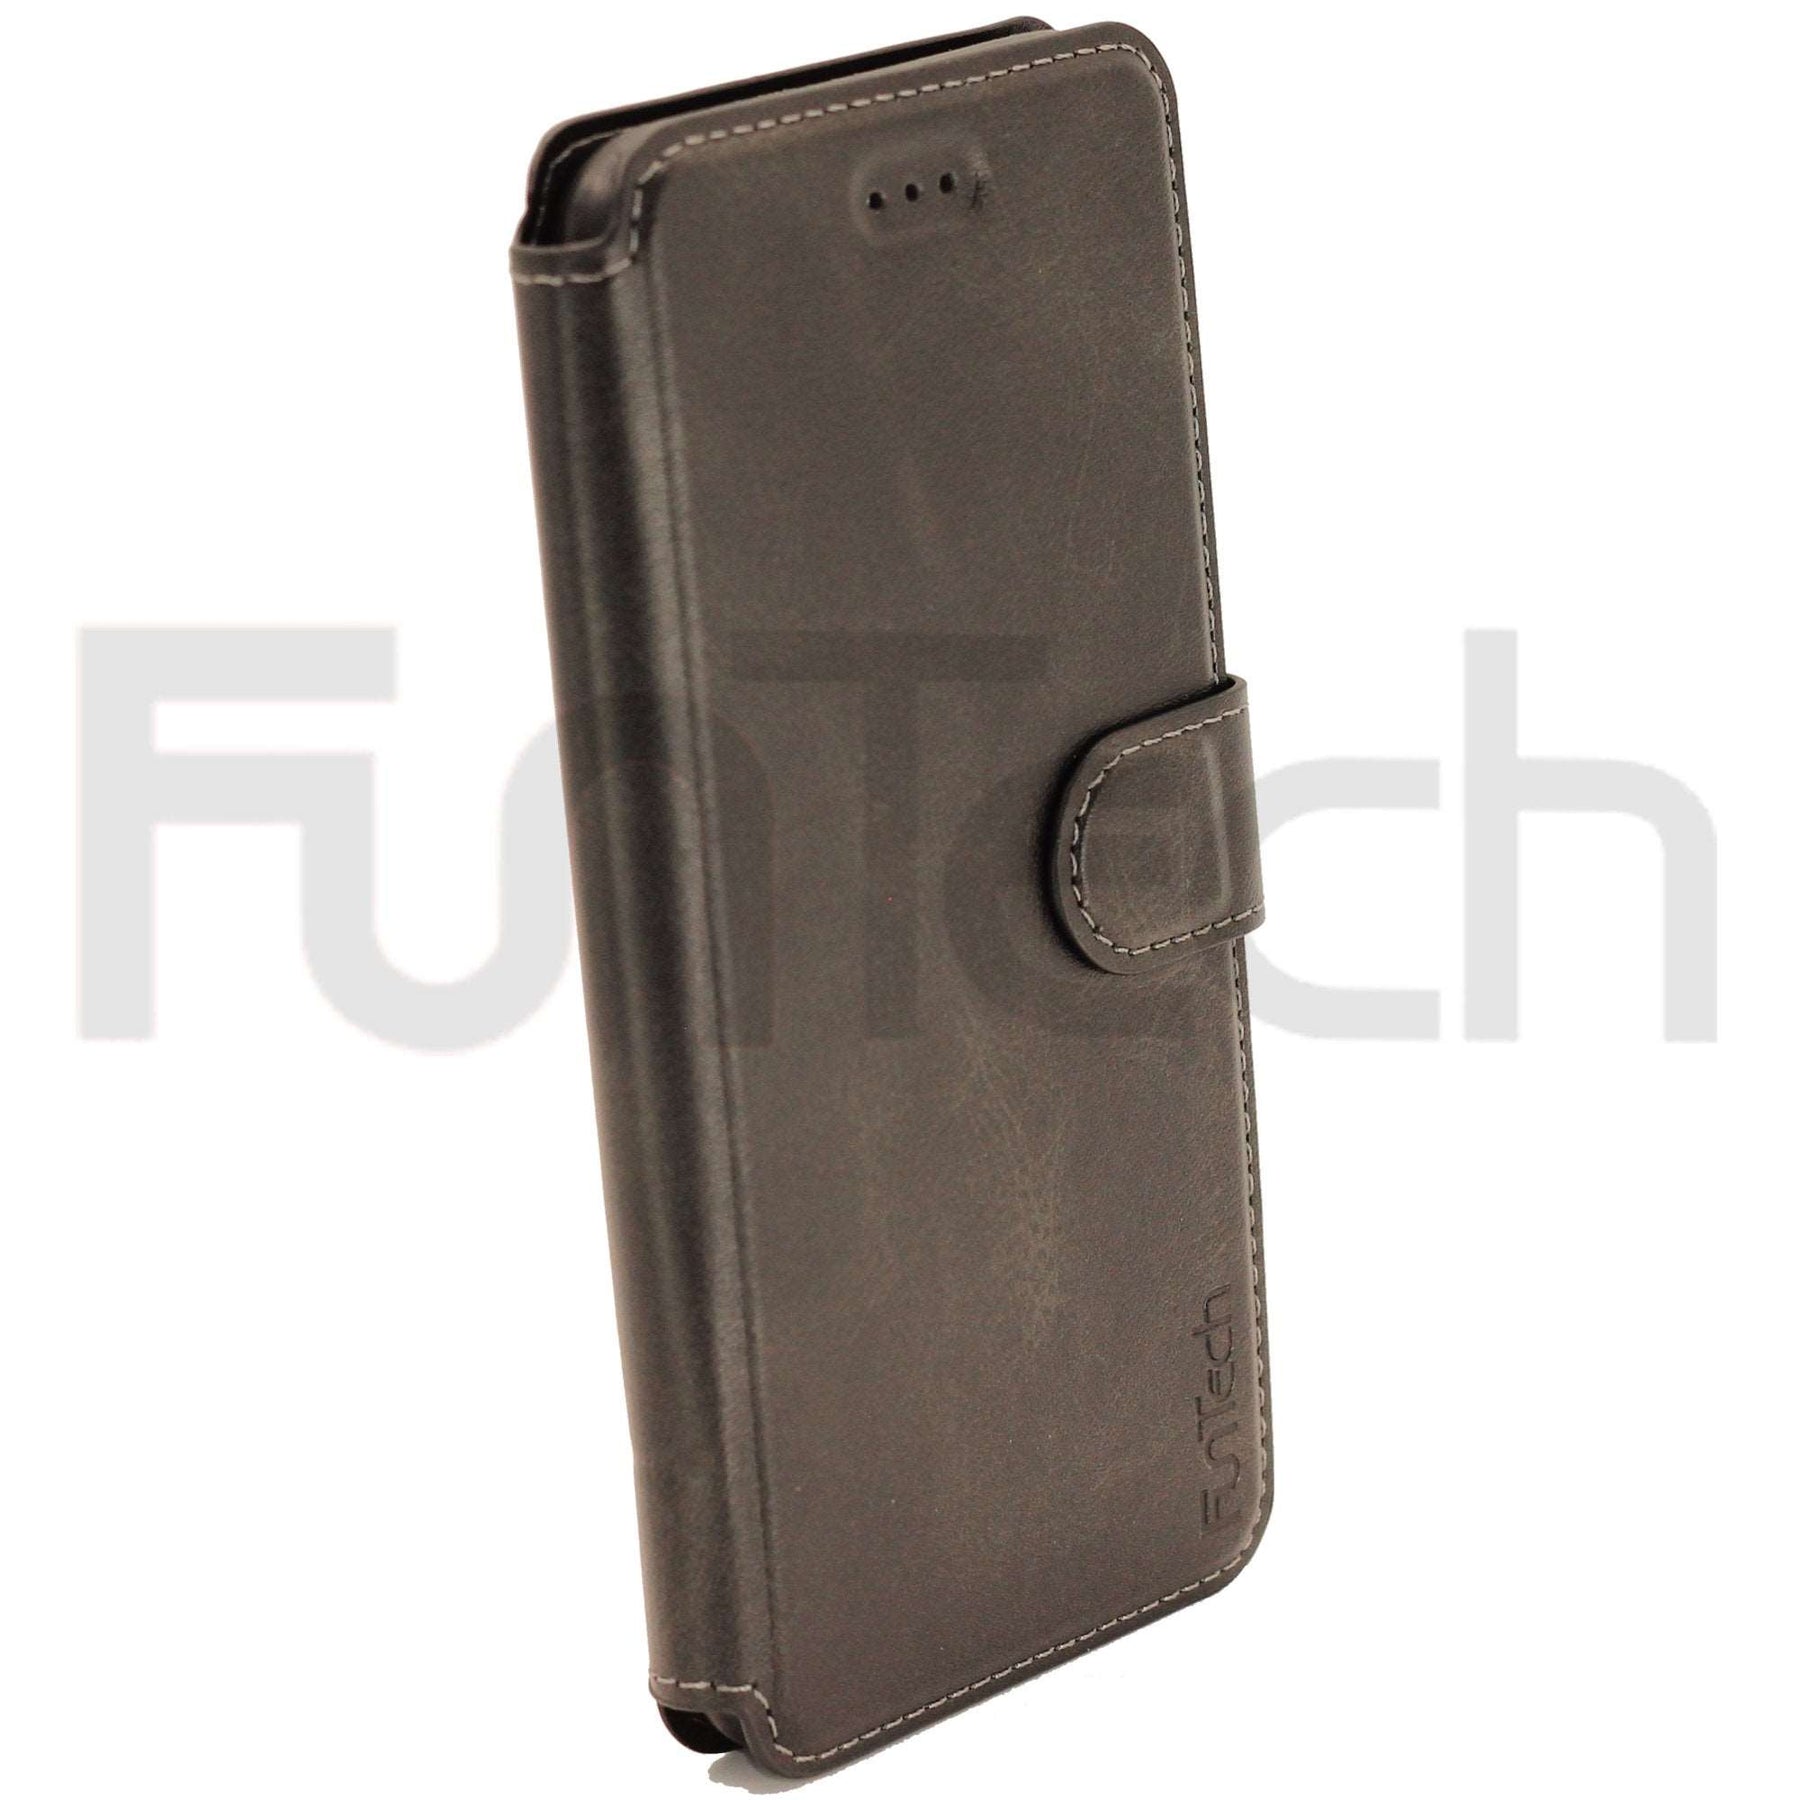 Apple iPhone 7/8 Plus Wallet Armor Case Black